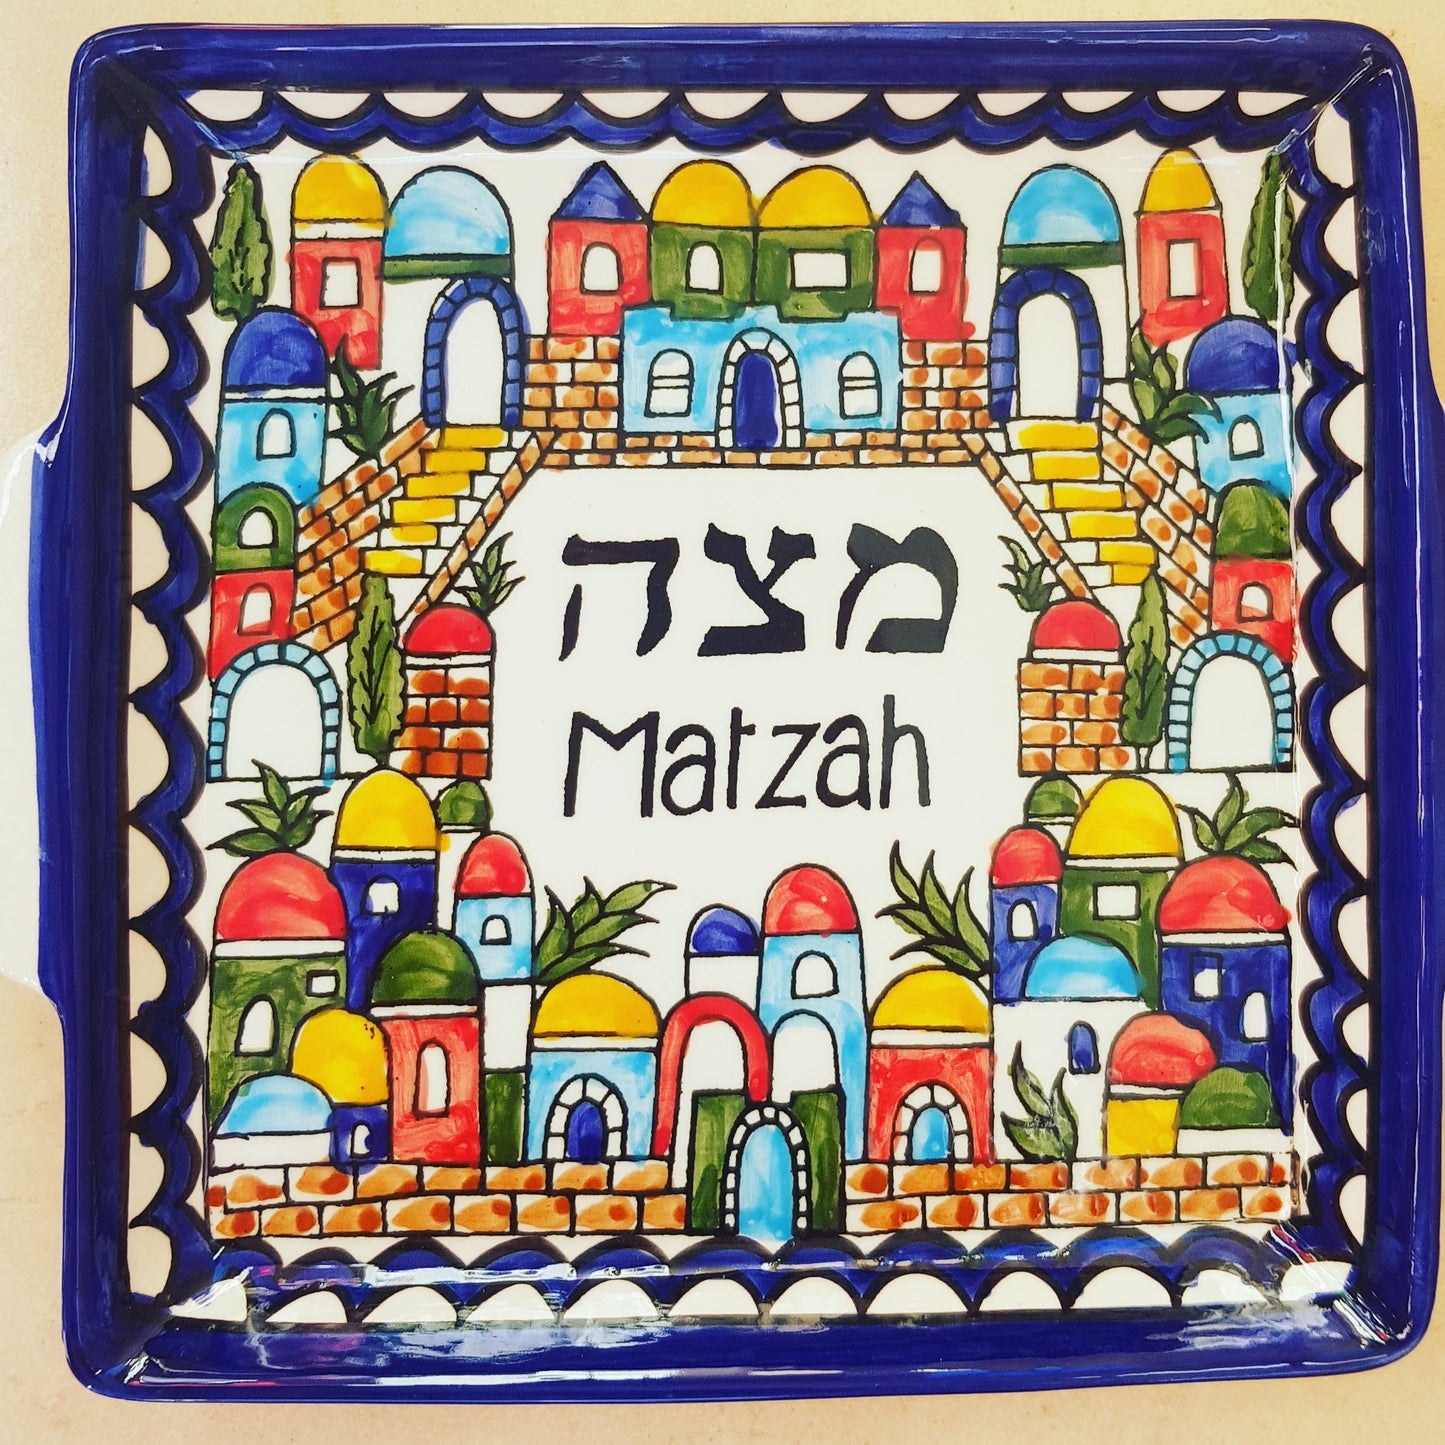 Bluenoemi Jewelry Plate 24 cm / Jerusalem Bluenoemi Armenian Ceramics Matza Plate for Passover Jewish Table